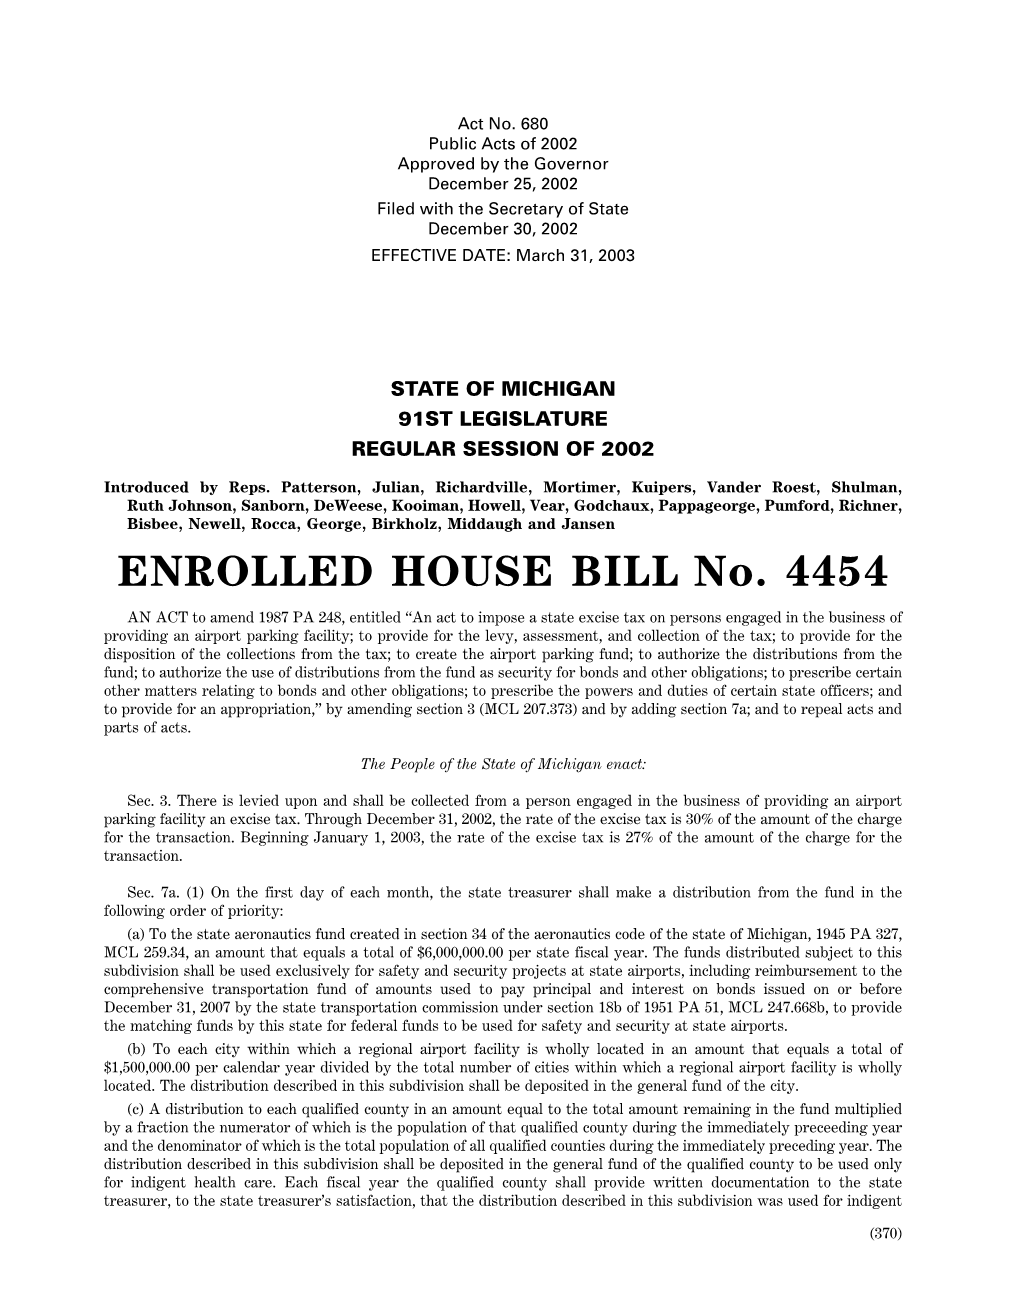 ENROLLED HOUSE BILL No. 4454